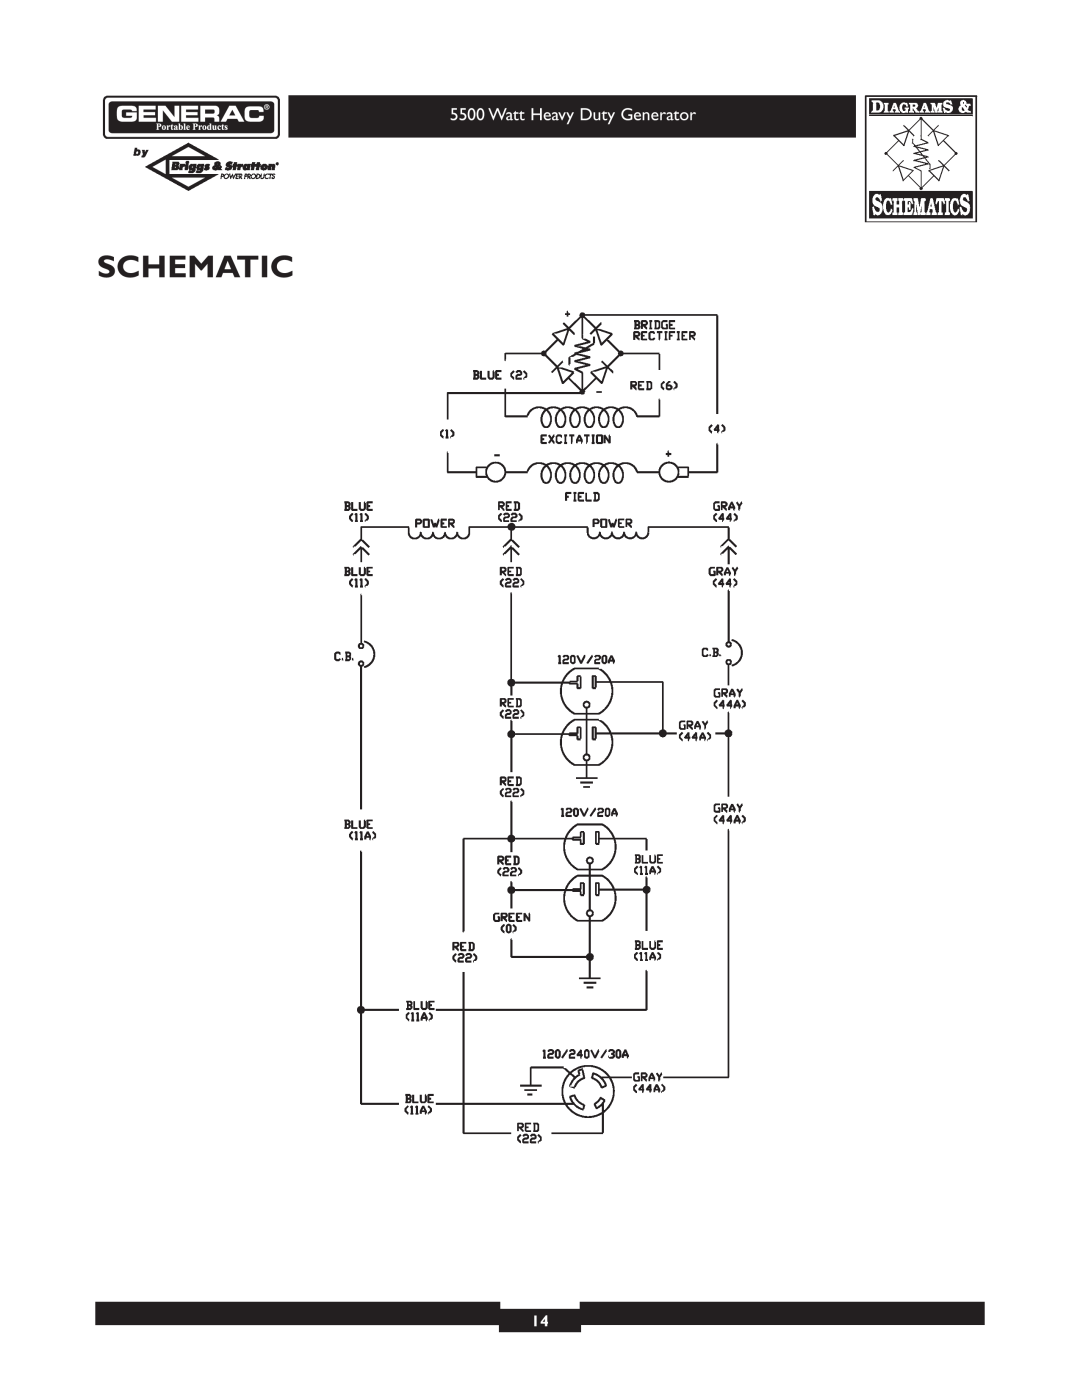 Generac 1654-0 owner manual Schematic, Watt Heavy Duty Generator 